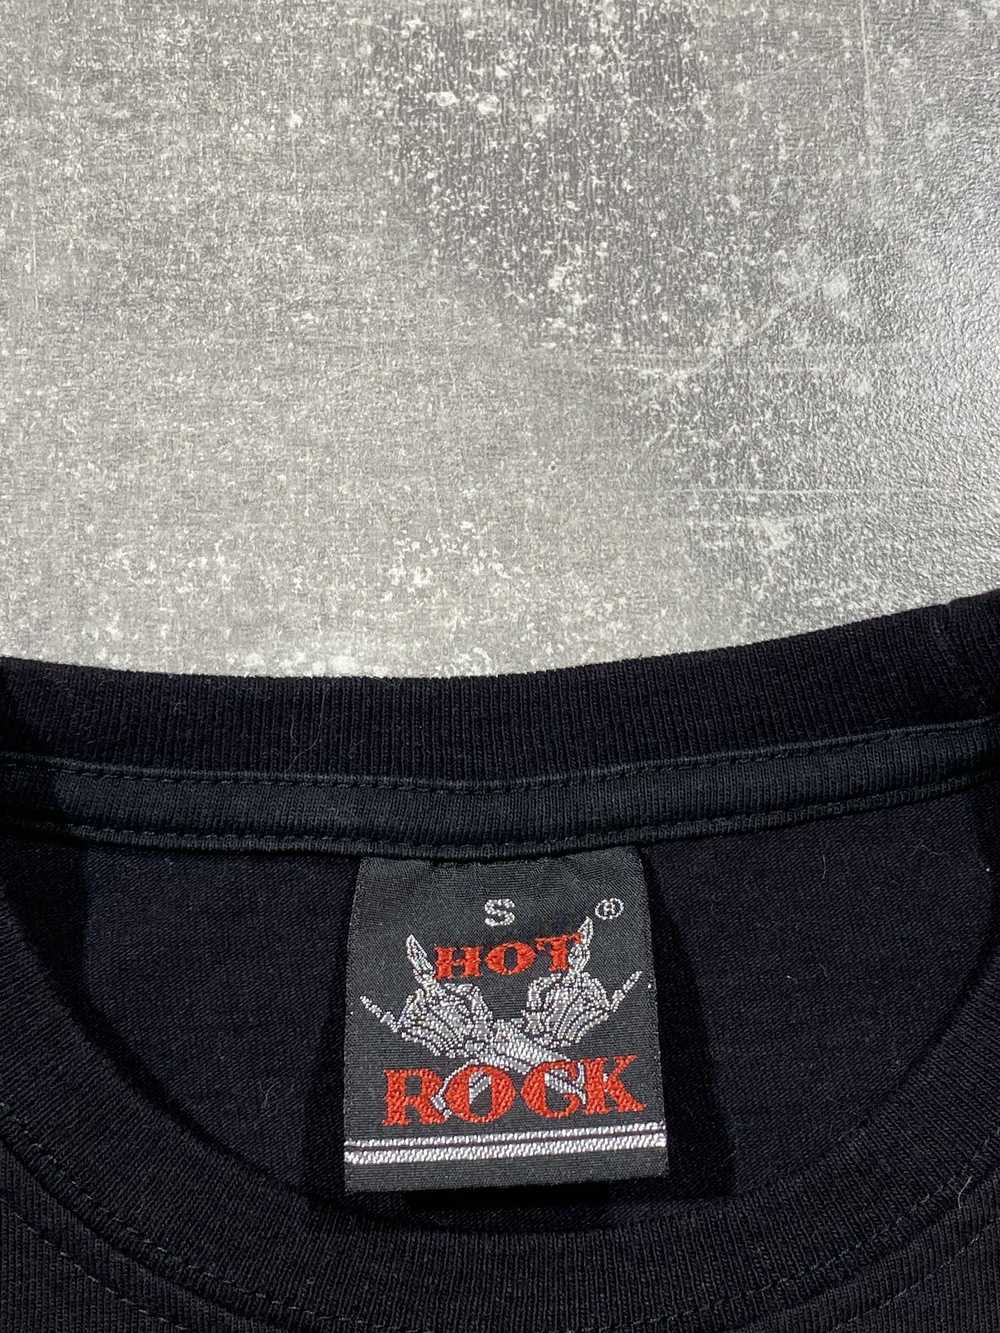 Band Tees × Megadeth × Rock T Shirt Megadeth skul… - image 2